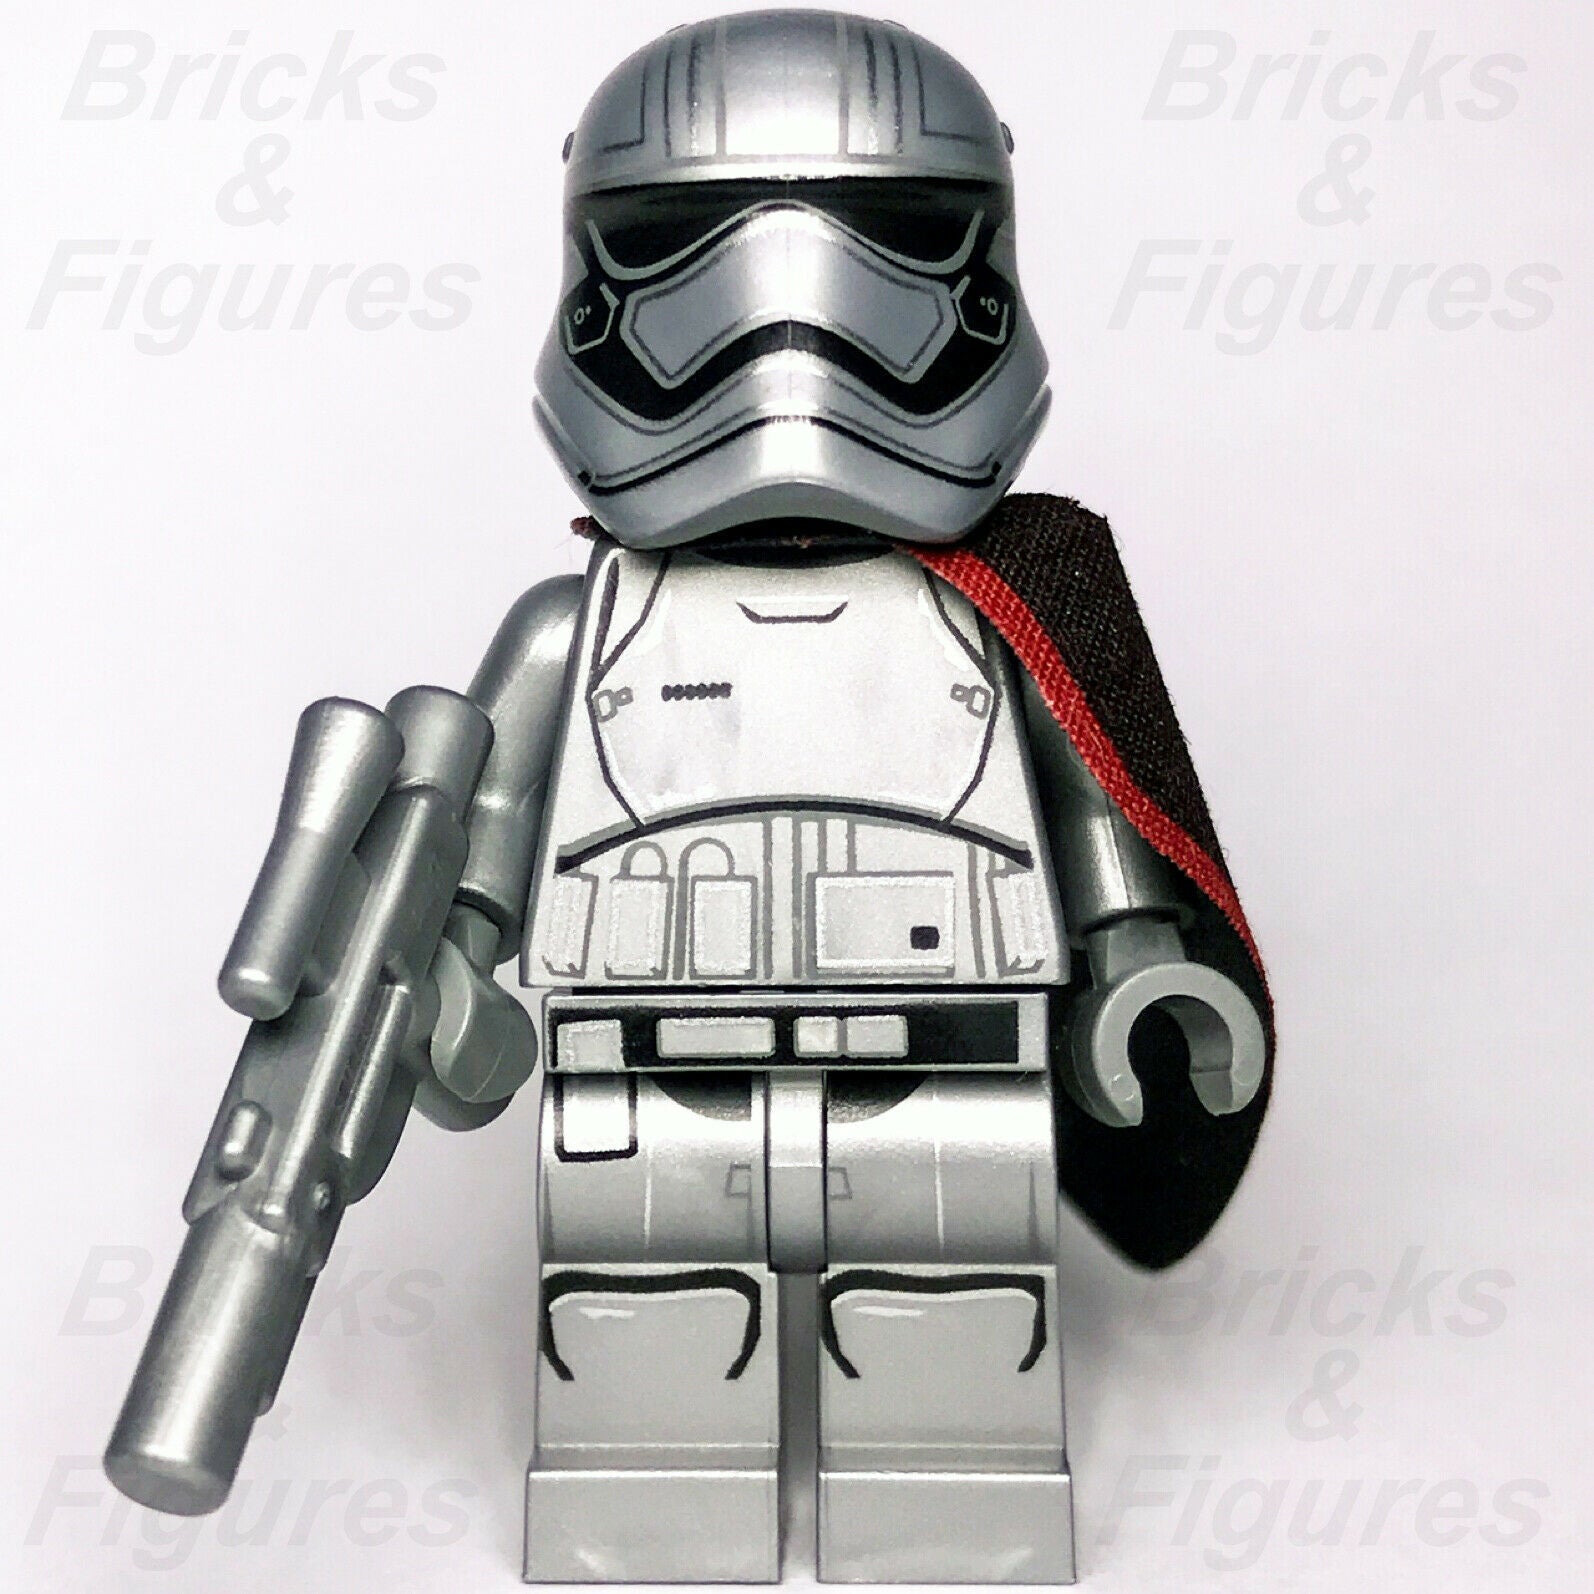 New Star Wars LEGO Captain Phasma First Order Stormtrooper Minifigure 75103 - Bricks & Figures